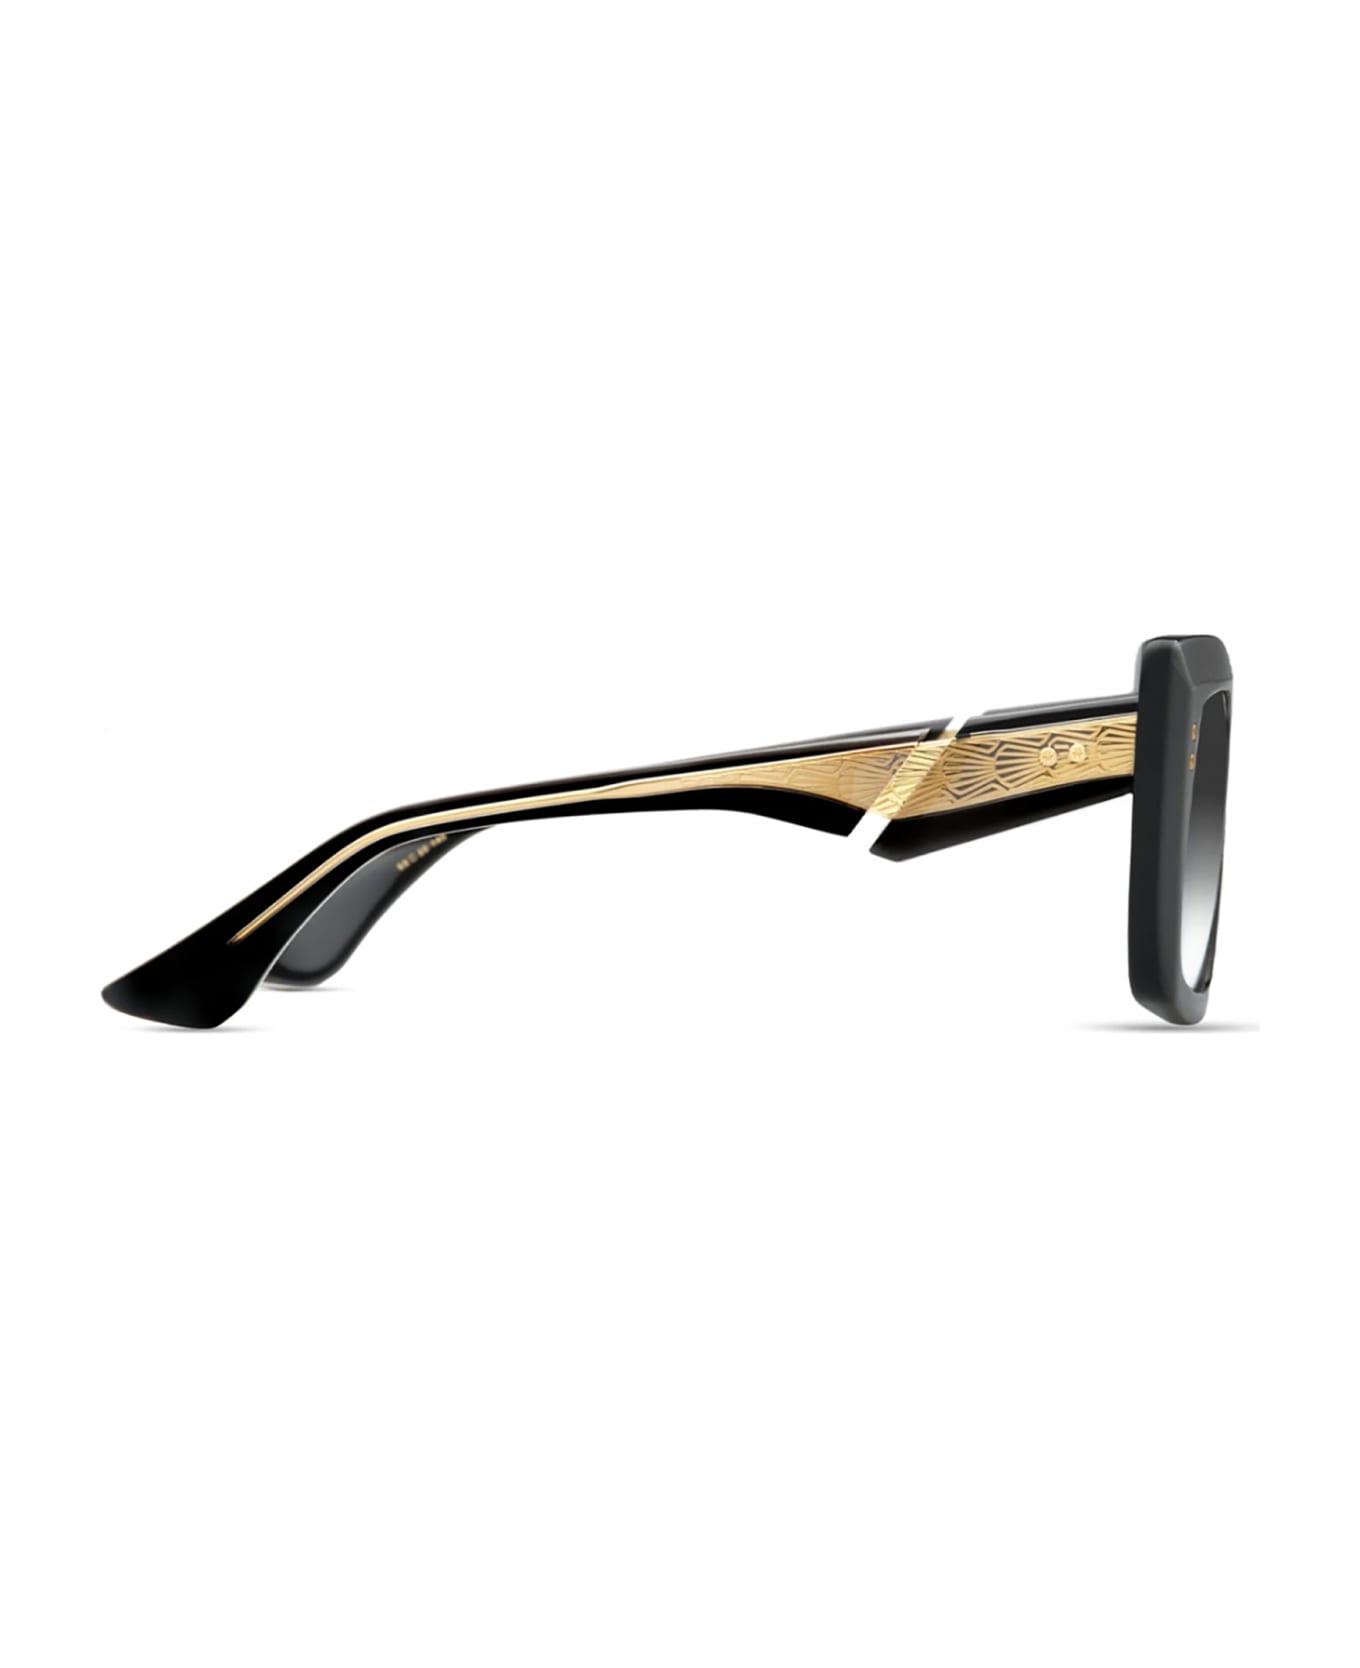 Dita DTS437/A/01 MAHINE Sunglasses - Black Yellow Gold